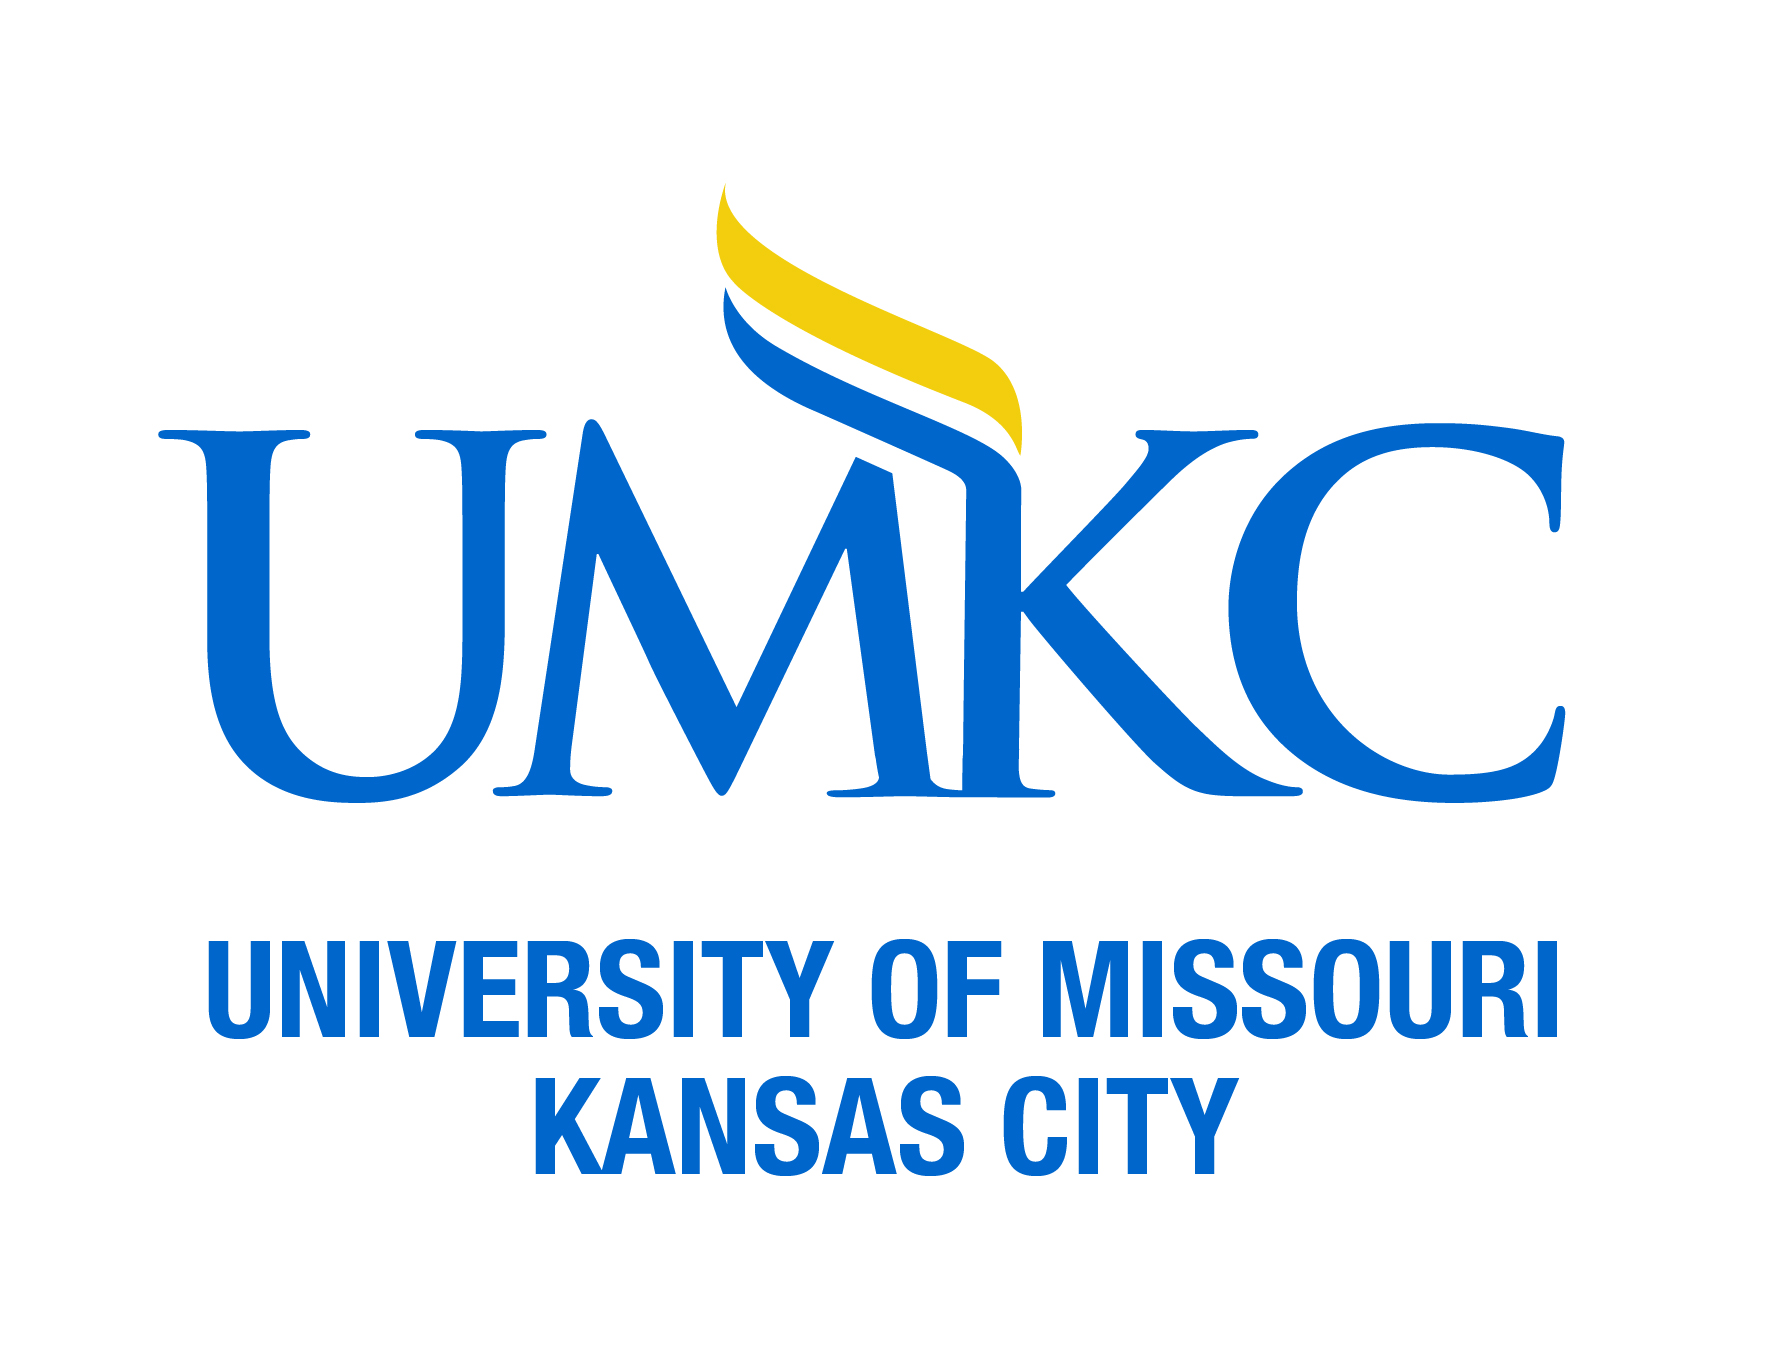 UMKC Professional Mo